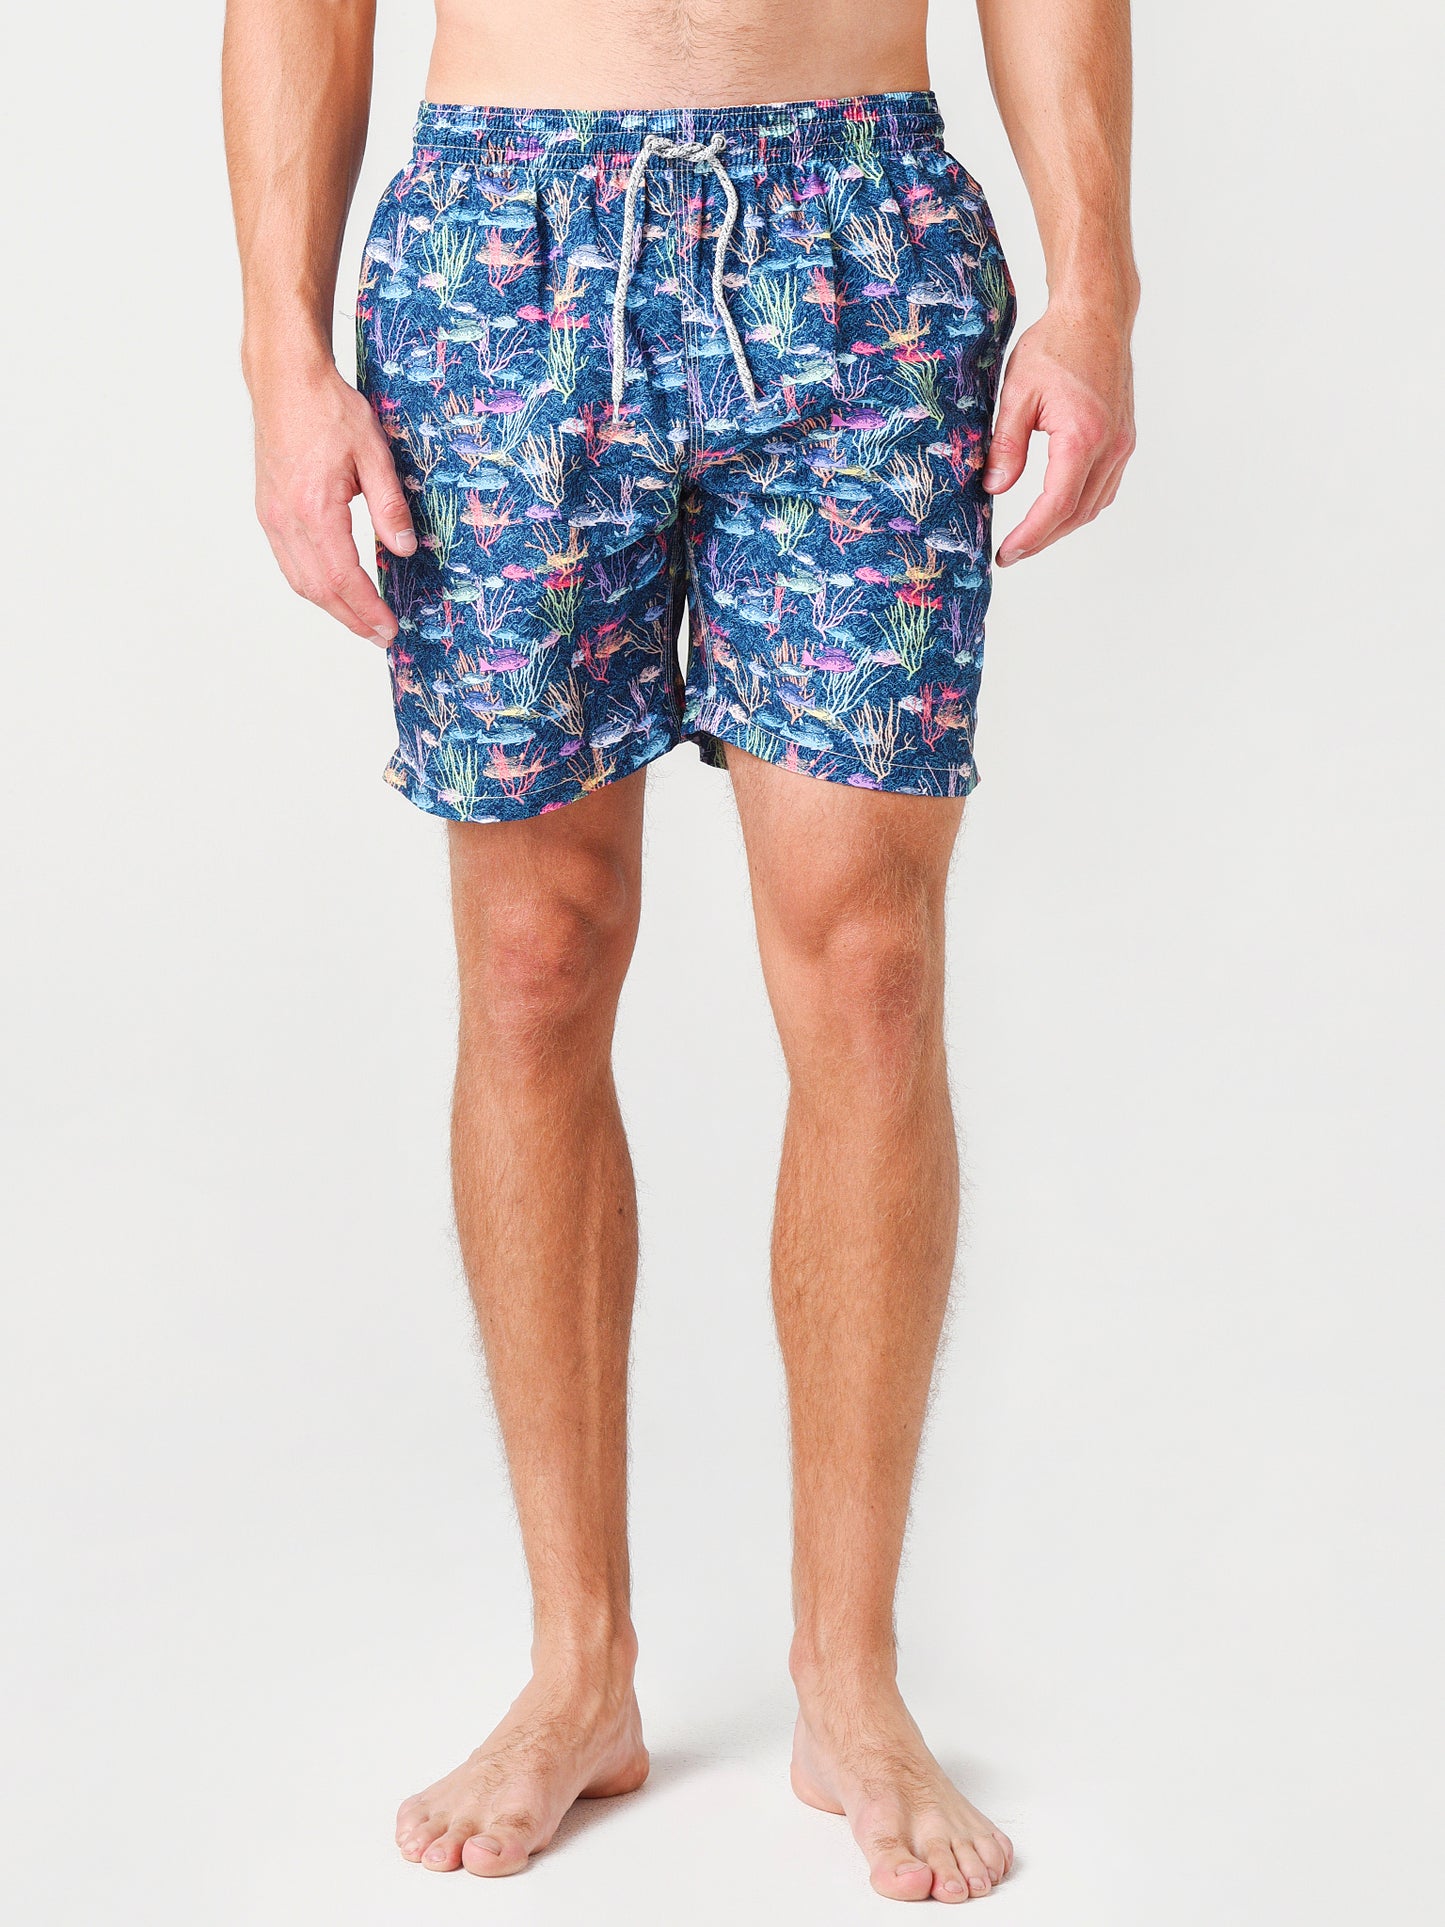 Michaels Swimwear Men's Fish & Coral Print Swim Trunk with Cyclist Liner